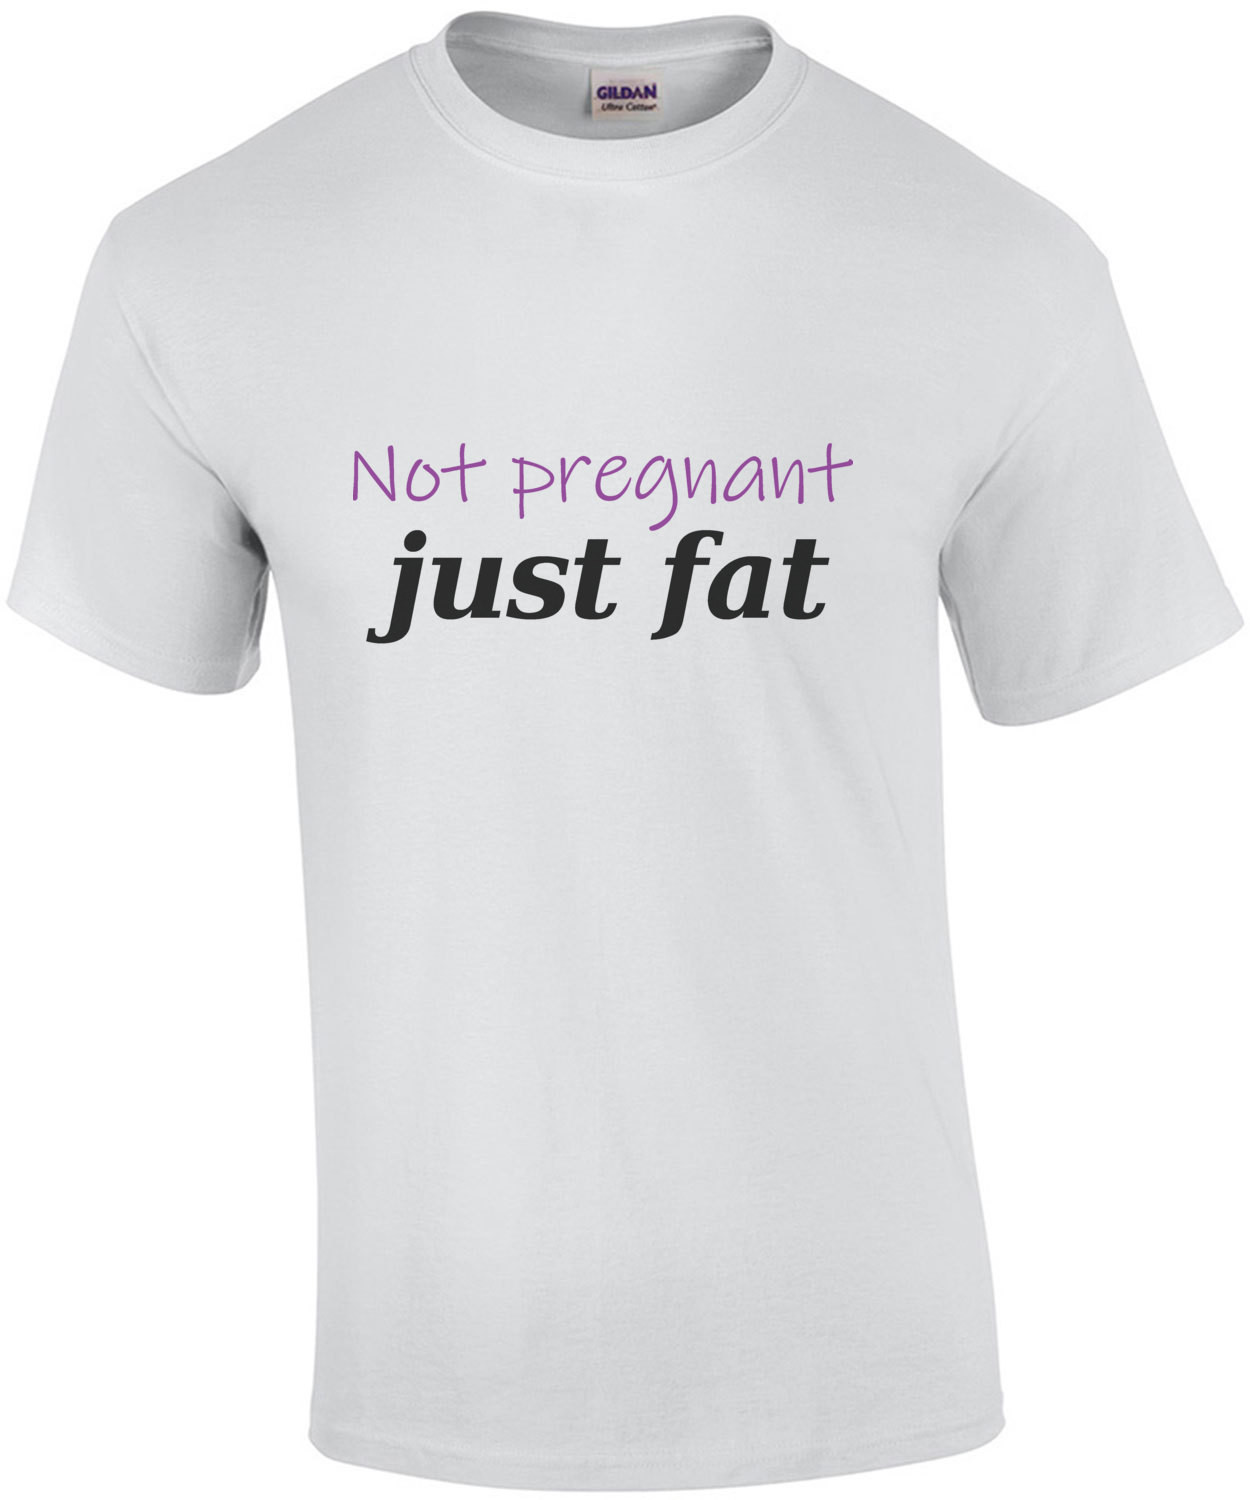 Not pregnant - just fat t-shirt